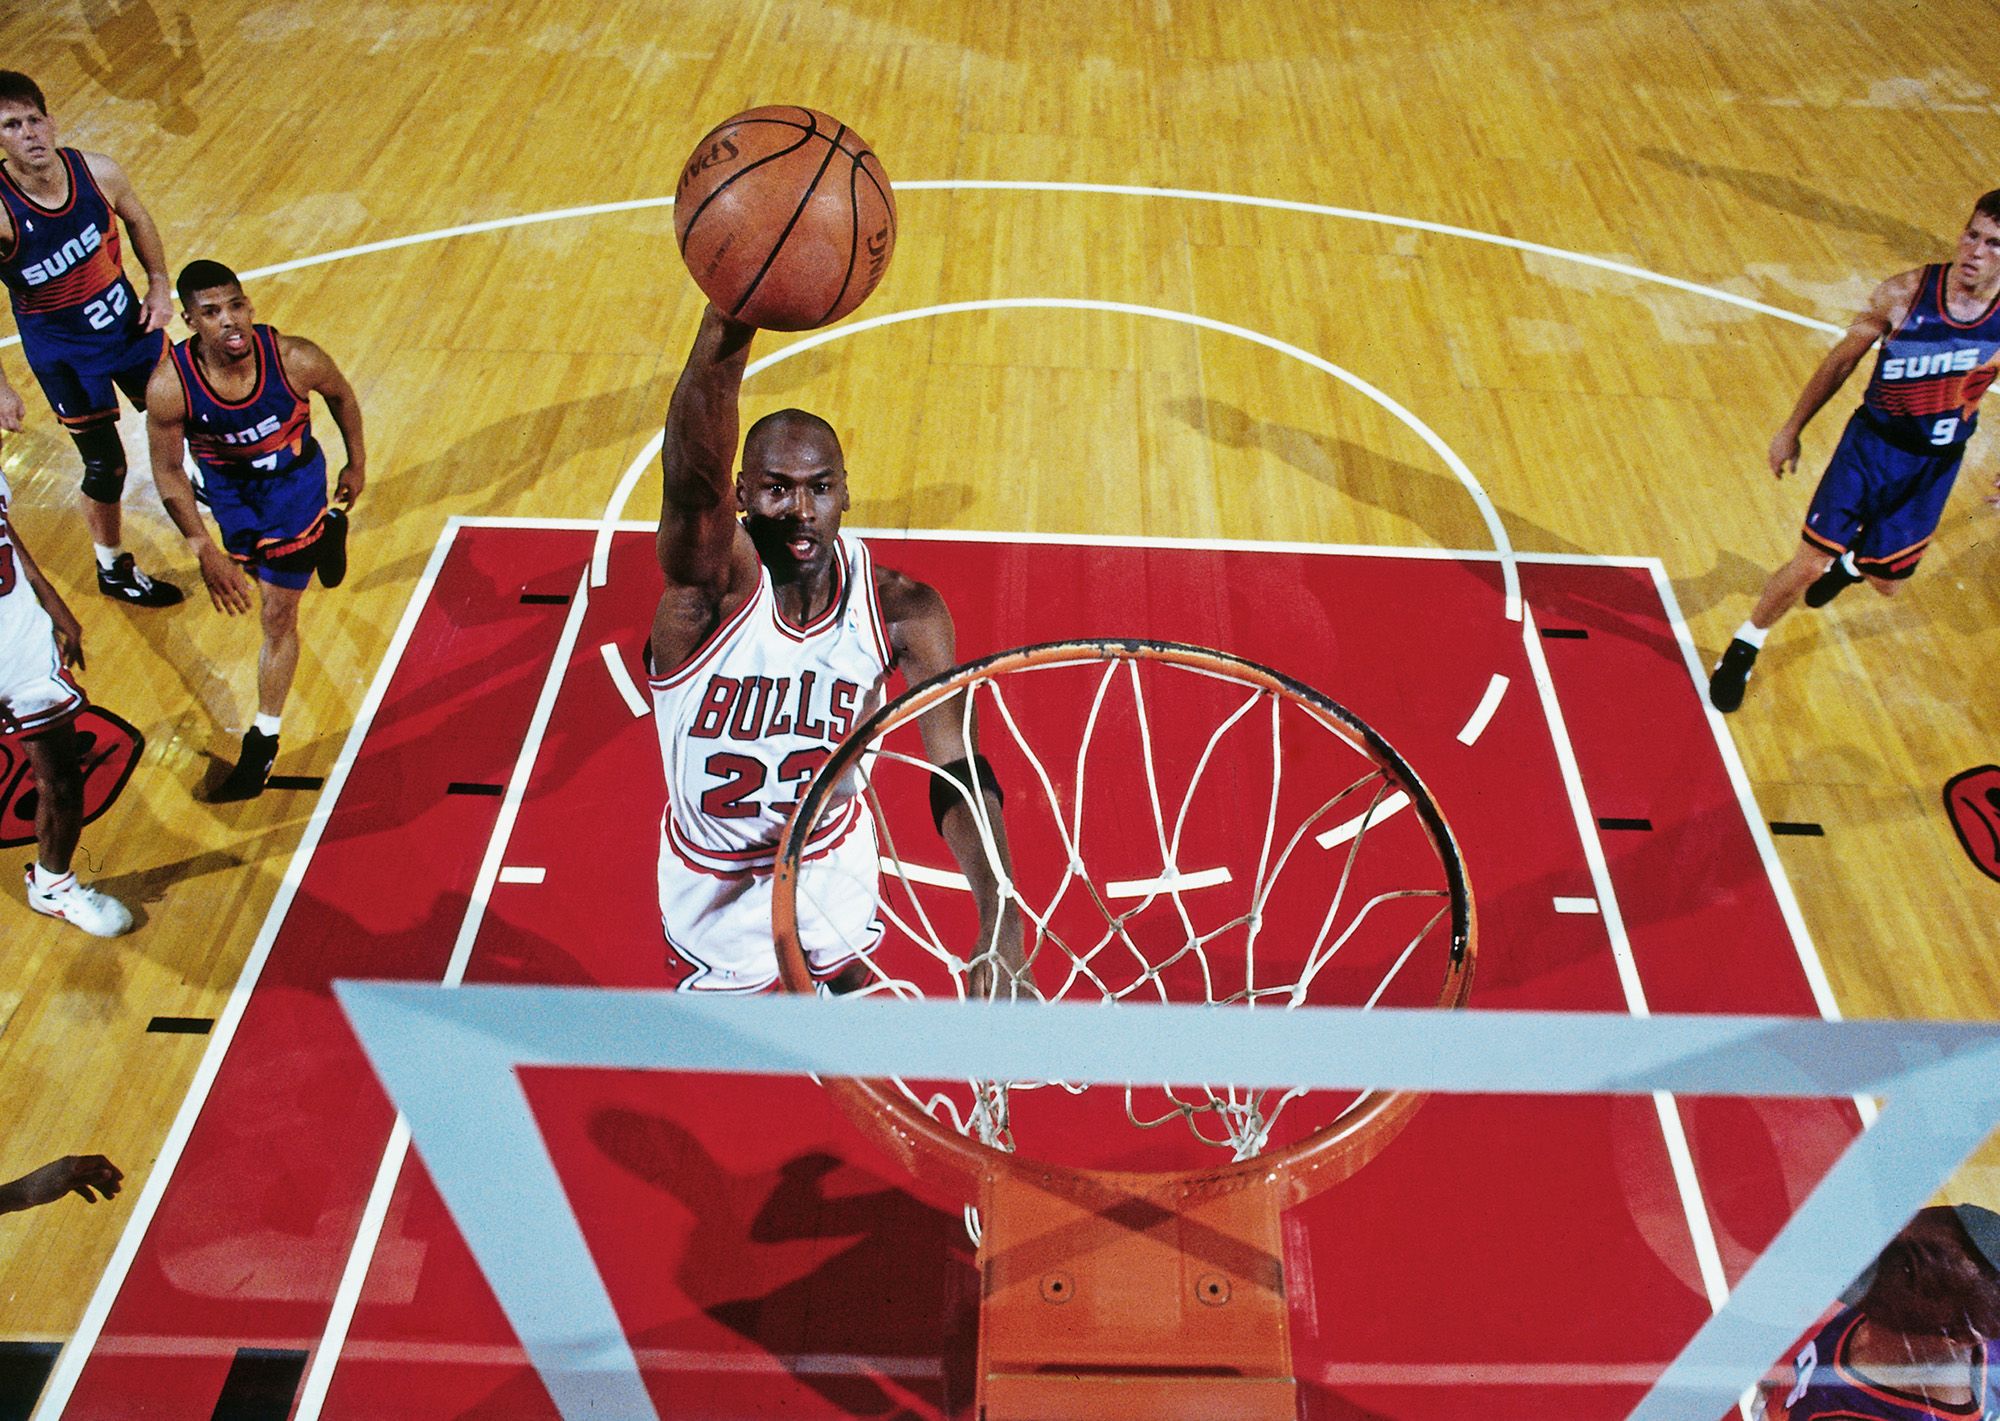 Scottie Pippen - Chicago Bulls Small Forward - ESPN